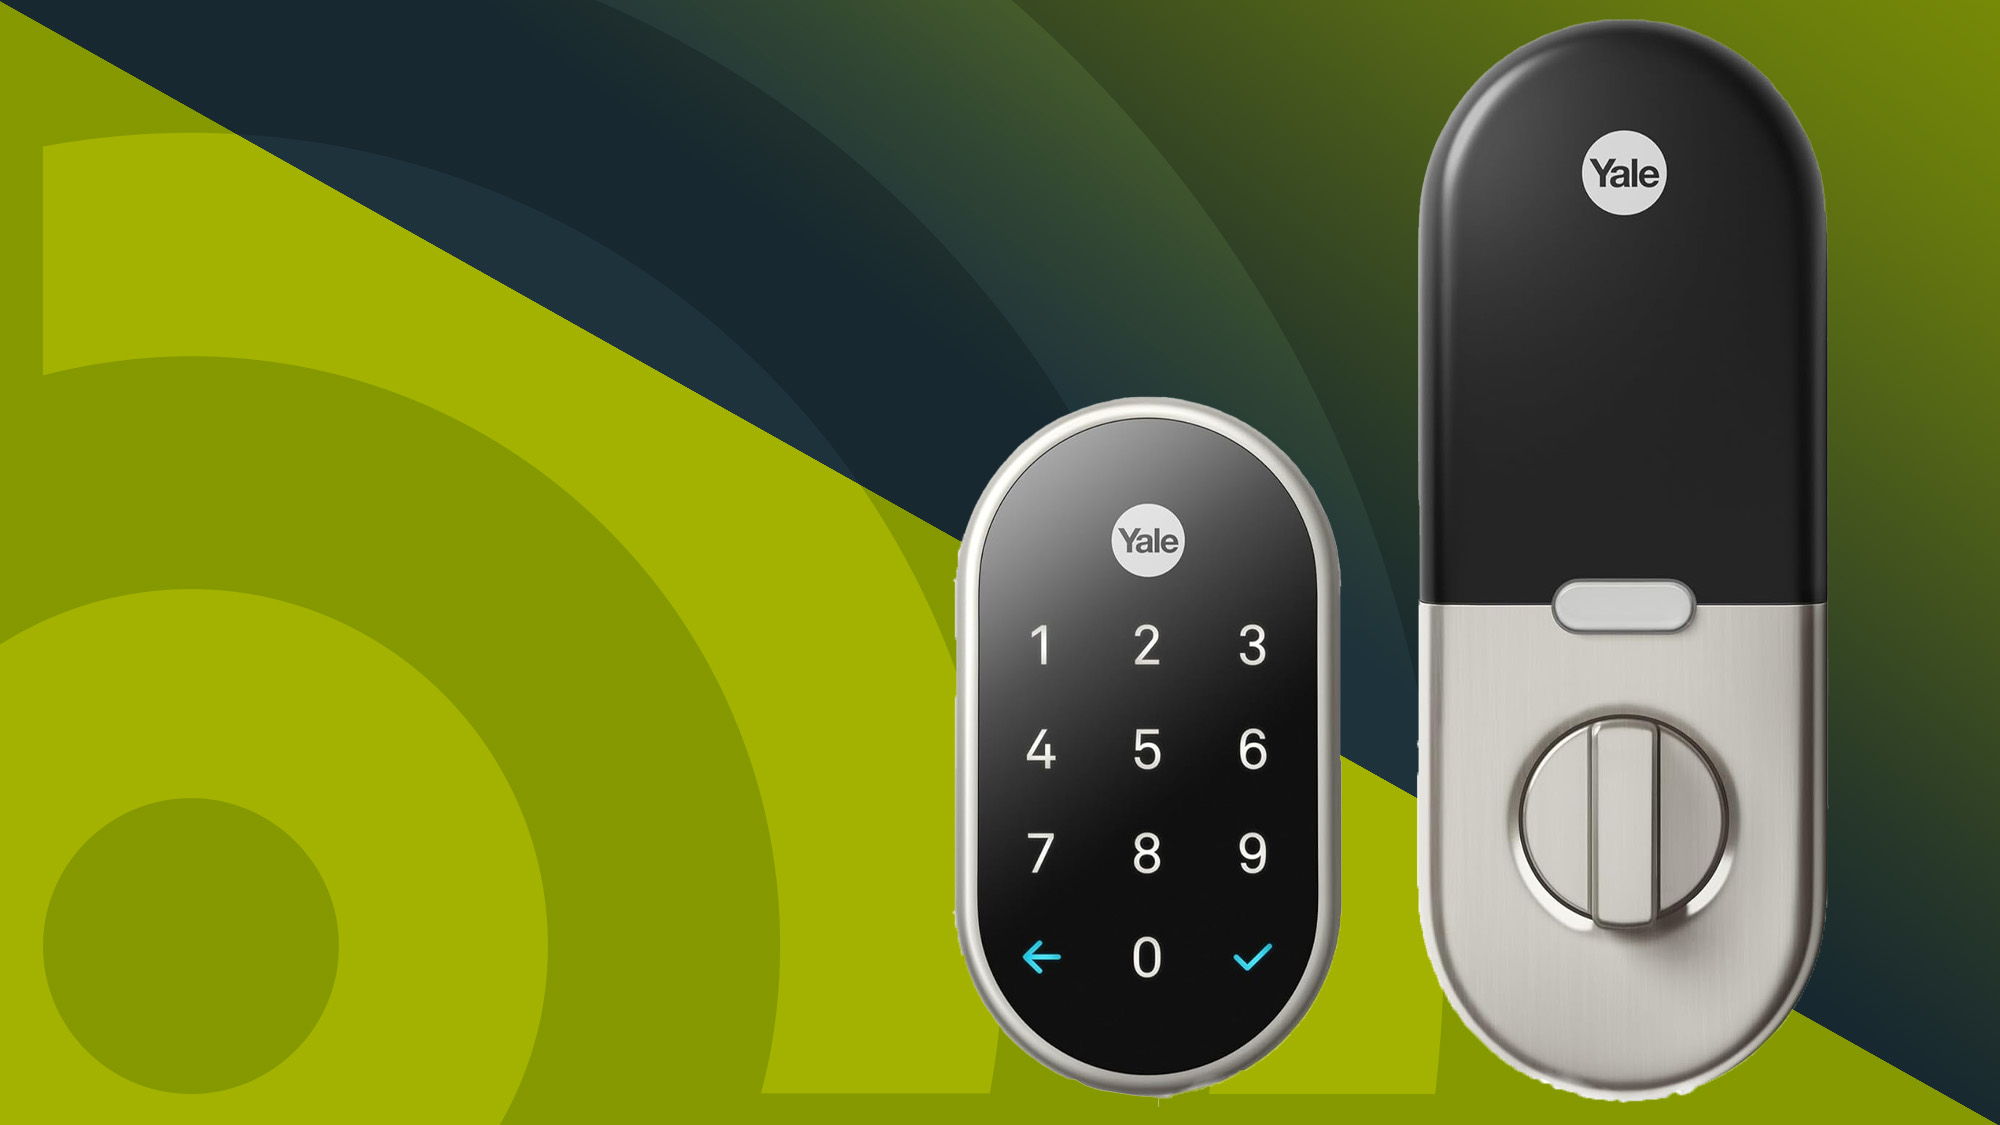 Ultion Nuki smart door lock can now be opened with your fingerprint